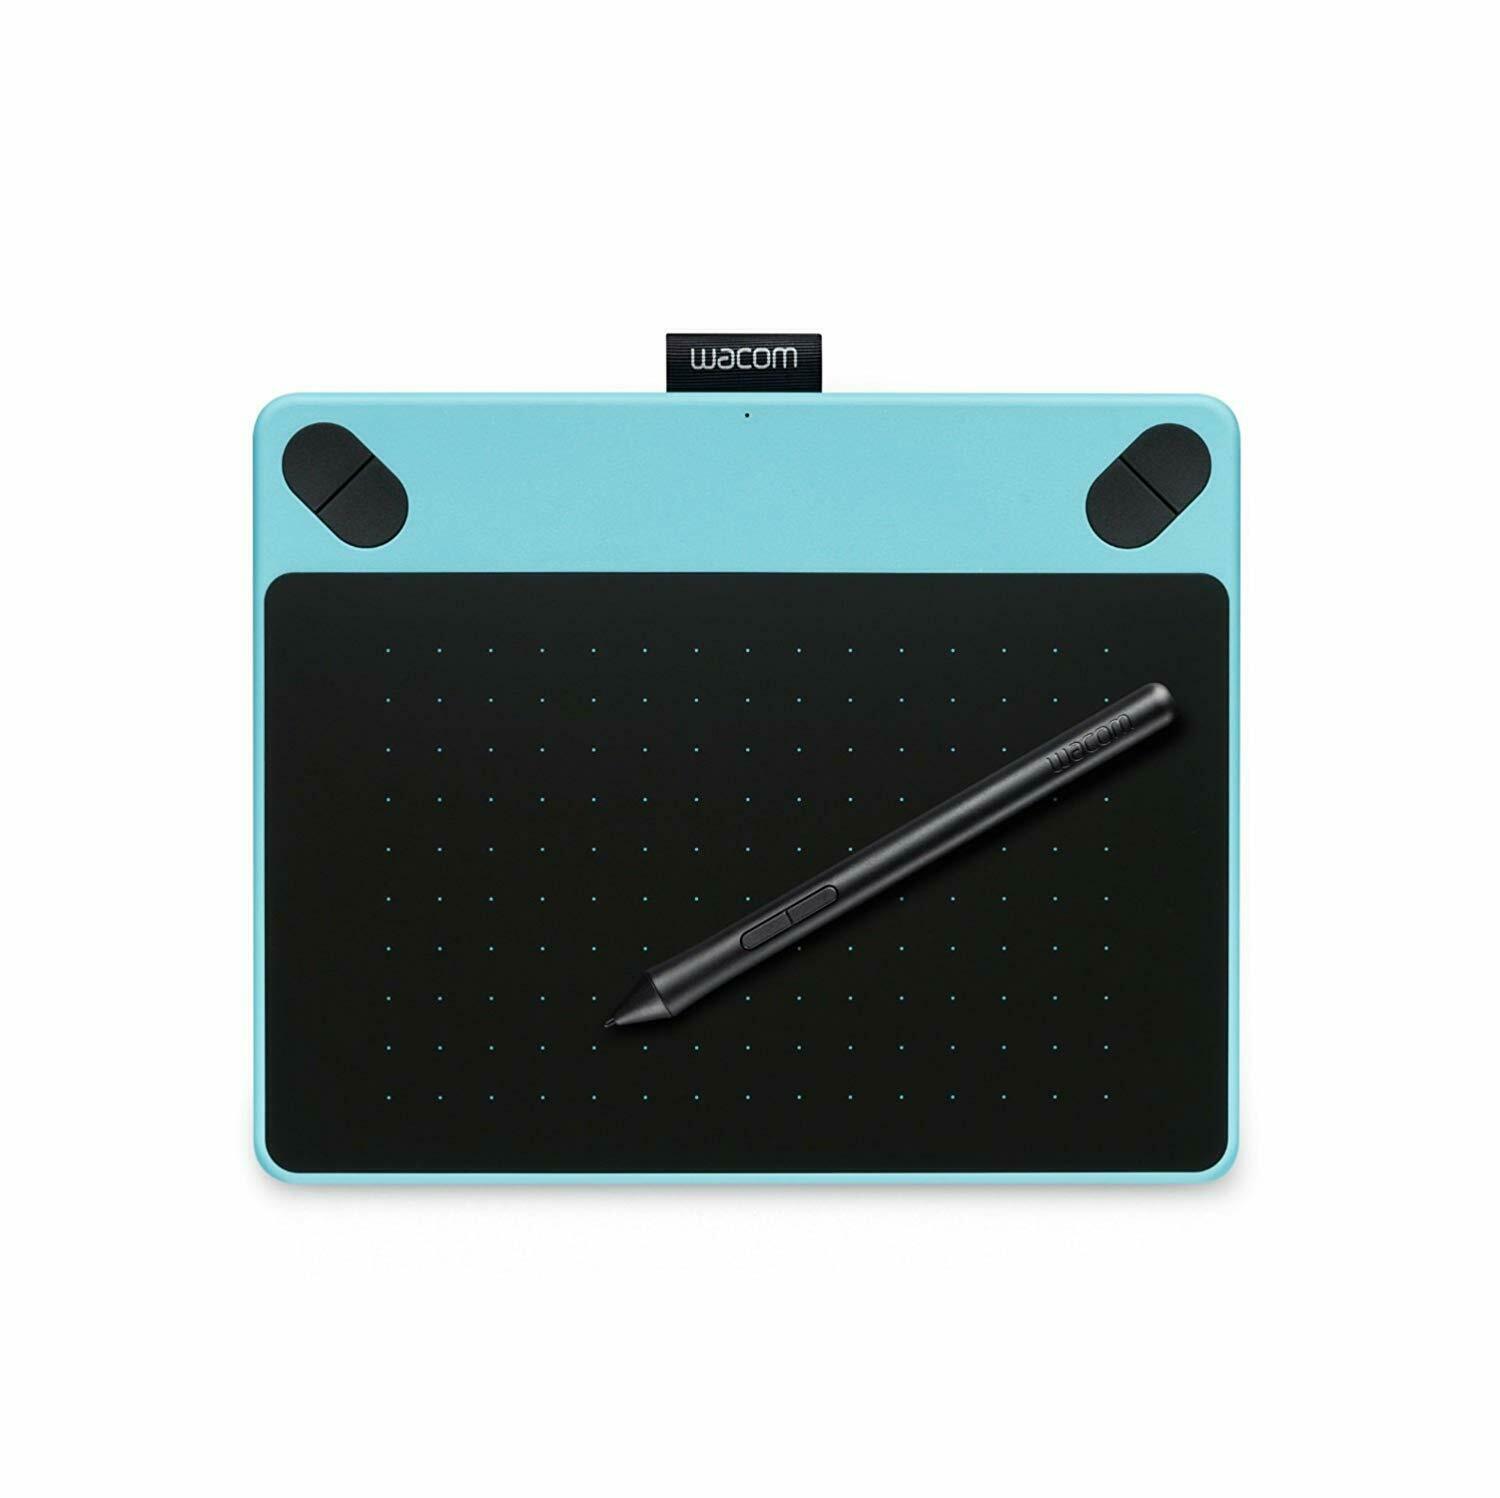 Wacom CTL-490/B0 [Mint Blue] Intuos Draw Small Size Pen Tablet FREEshipWorldwide